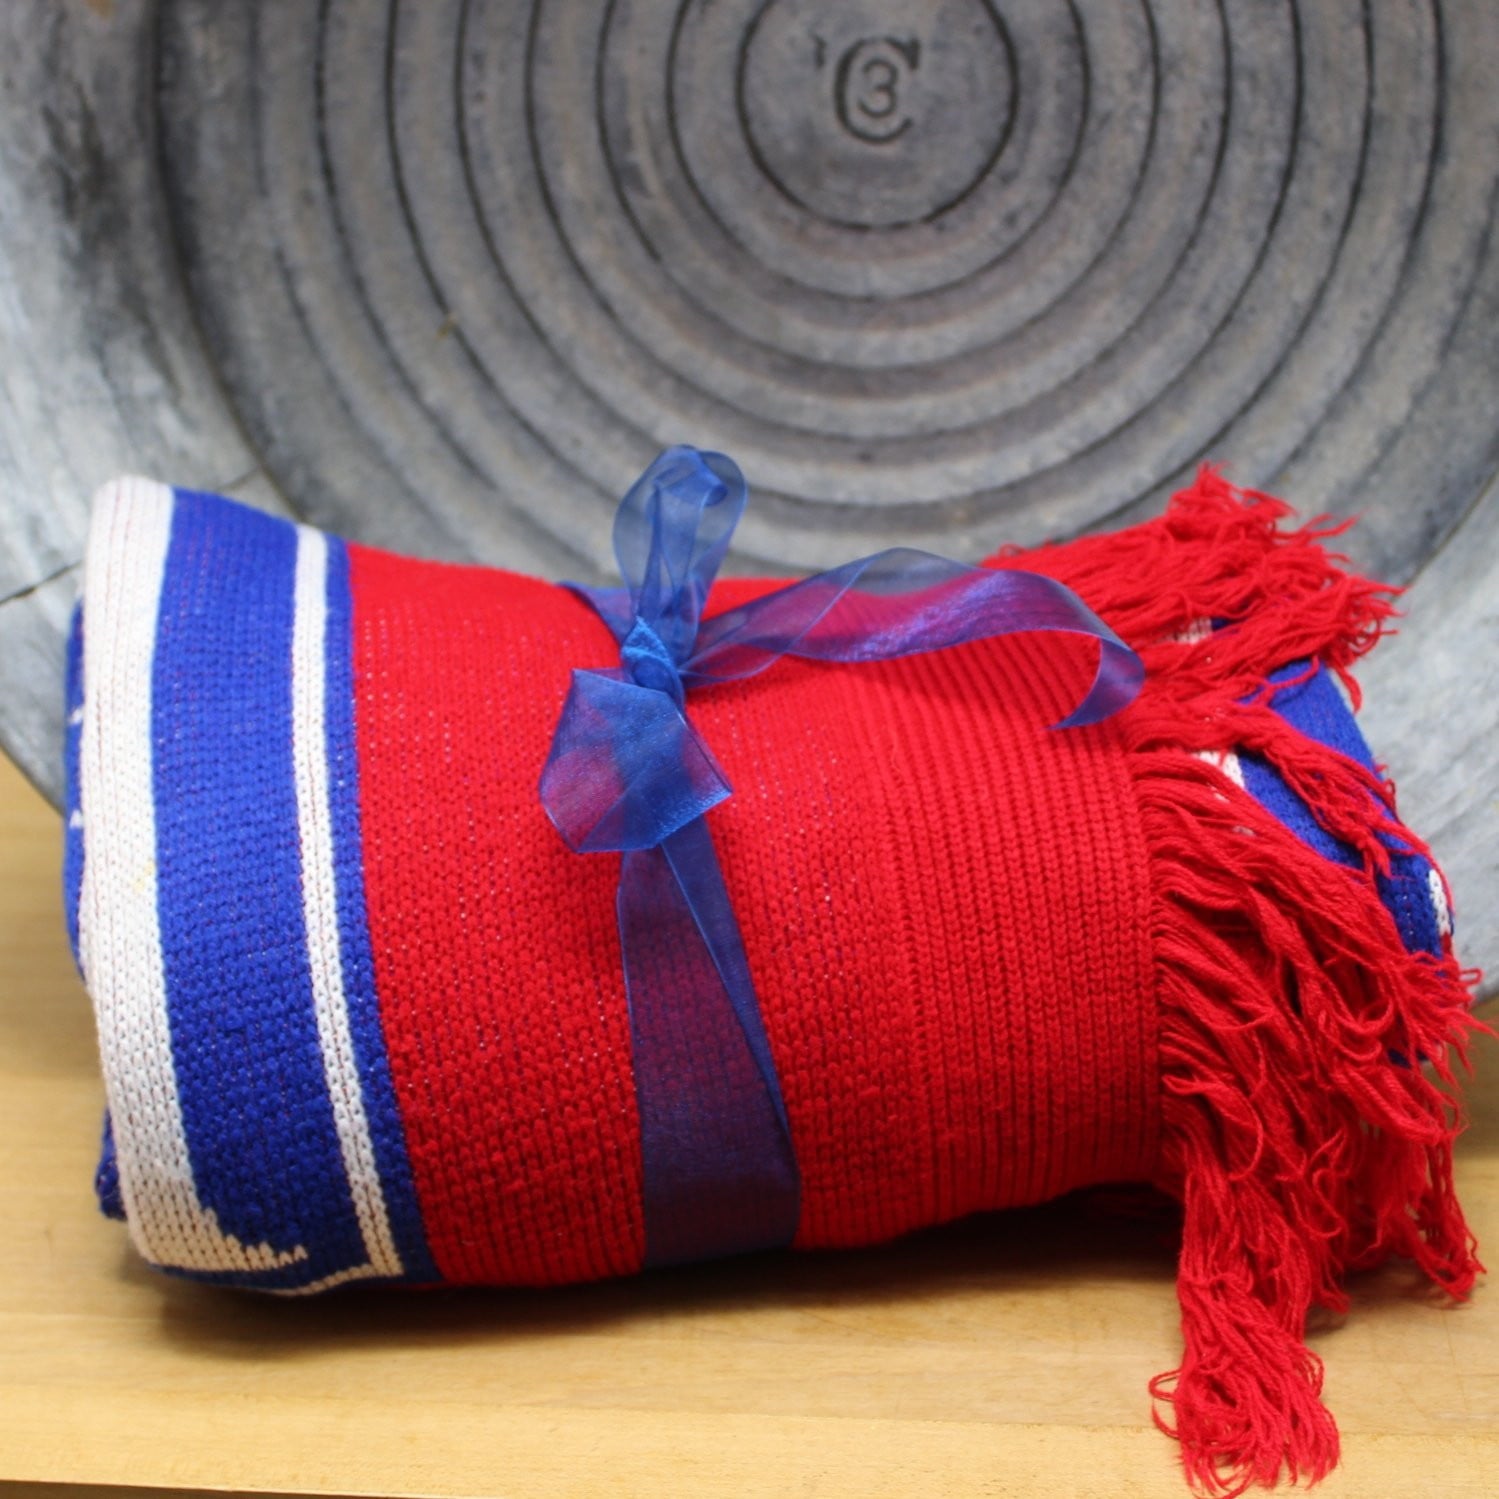 Big Ten Centennial Collectible Throw Blanket -  1896 -- 1996 - Wisconsin sweater knit heavy fringe